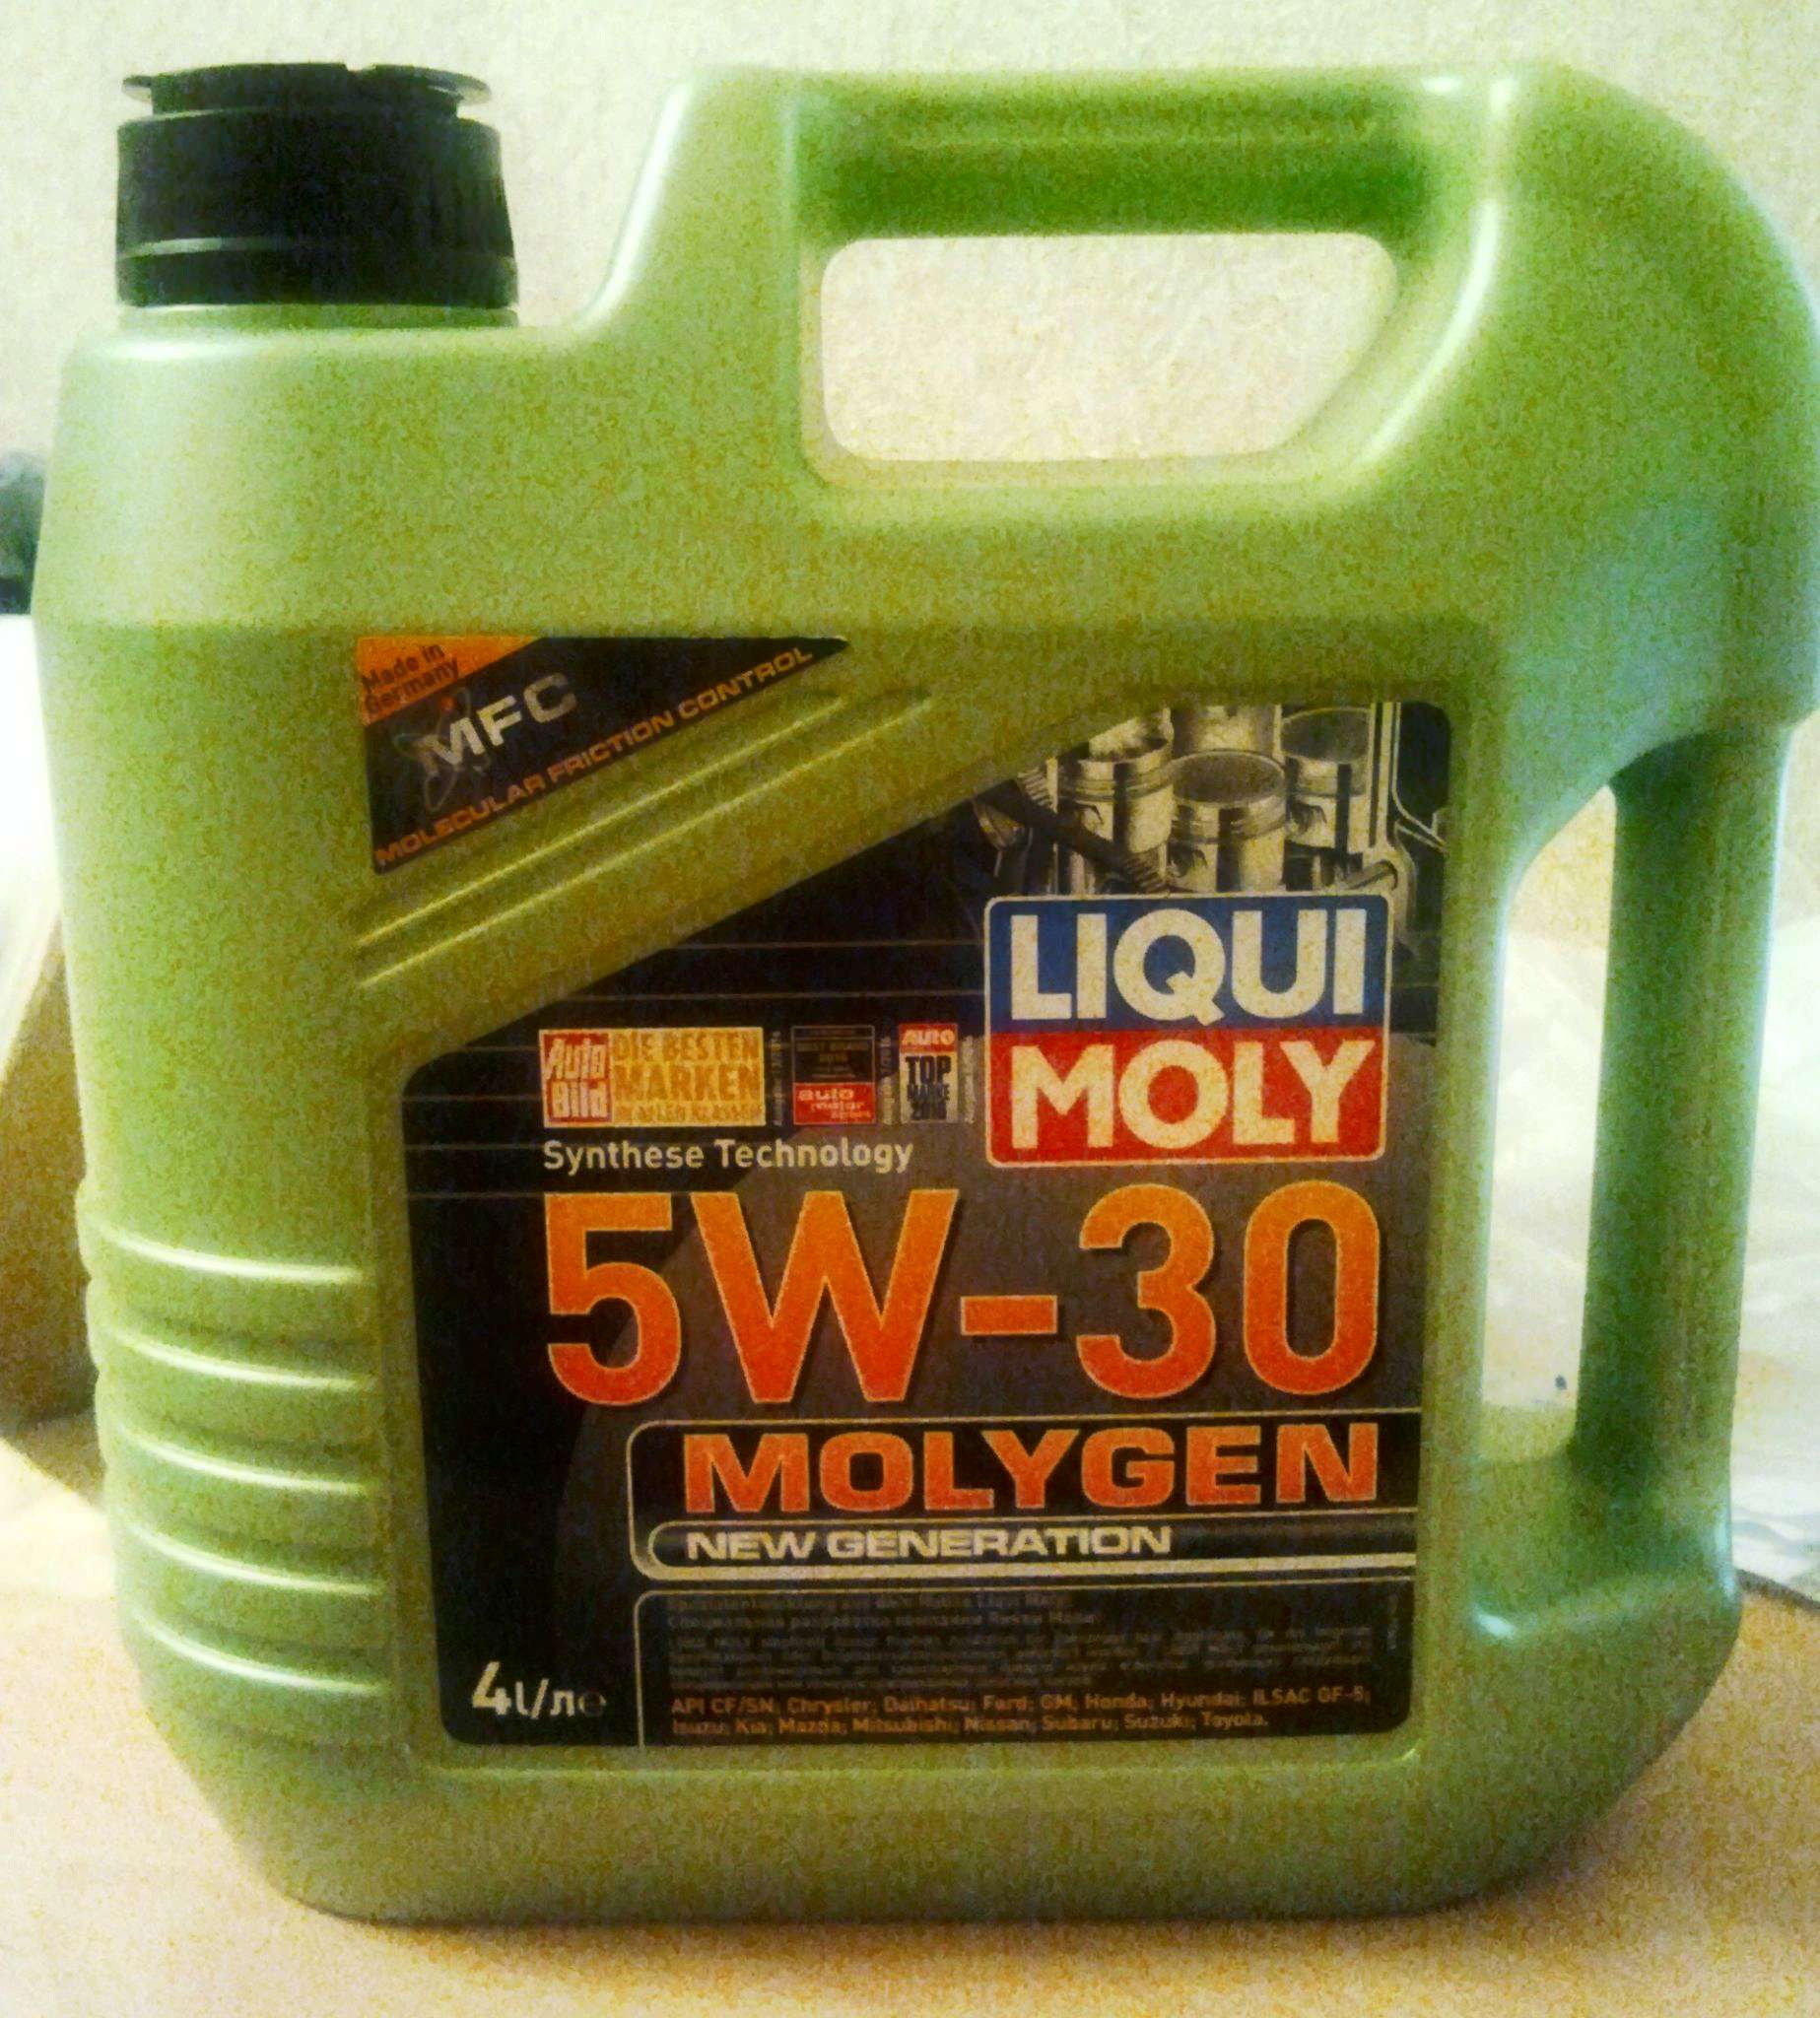 Купить масло ликви моли молиген. Molygen New Generation 5w-30. Ликви моли 5w30. Моторное масло Ликви моли молиген 5w30. Liqui Moly Molygen 5w-30 4 л.